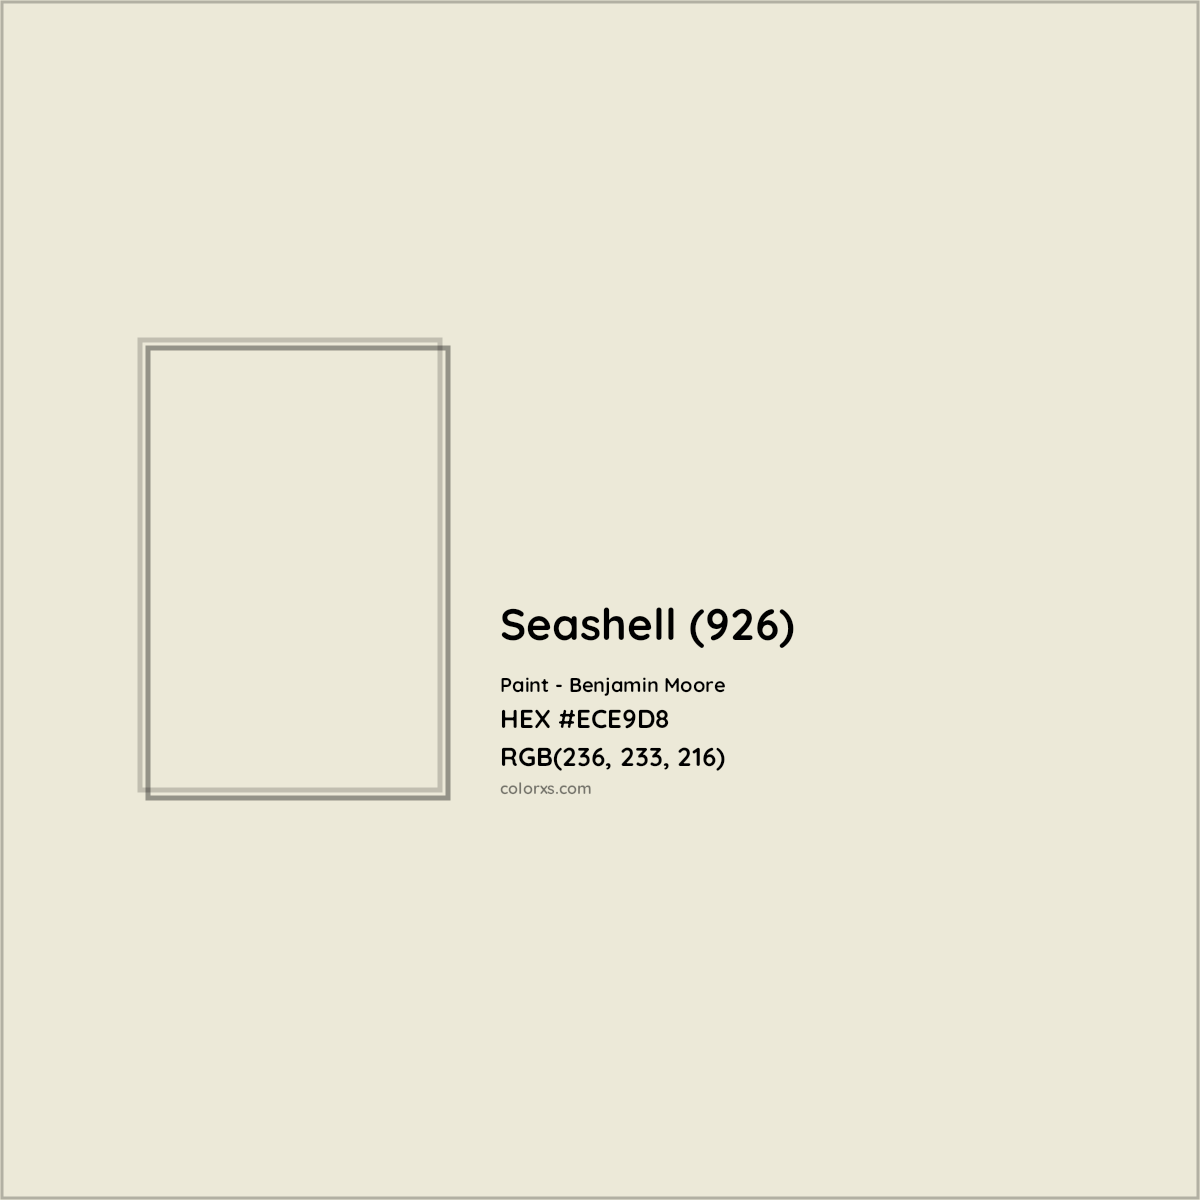 HEX #ECE9D8 Seashell (926) Paint Benjamin Moore - Color Code